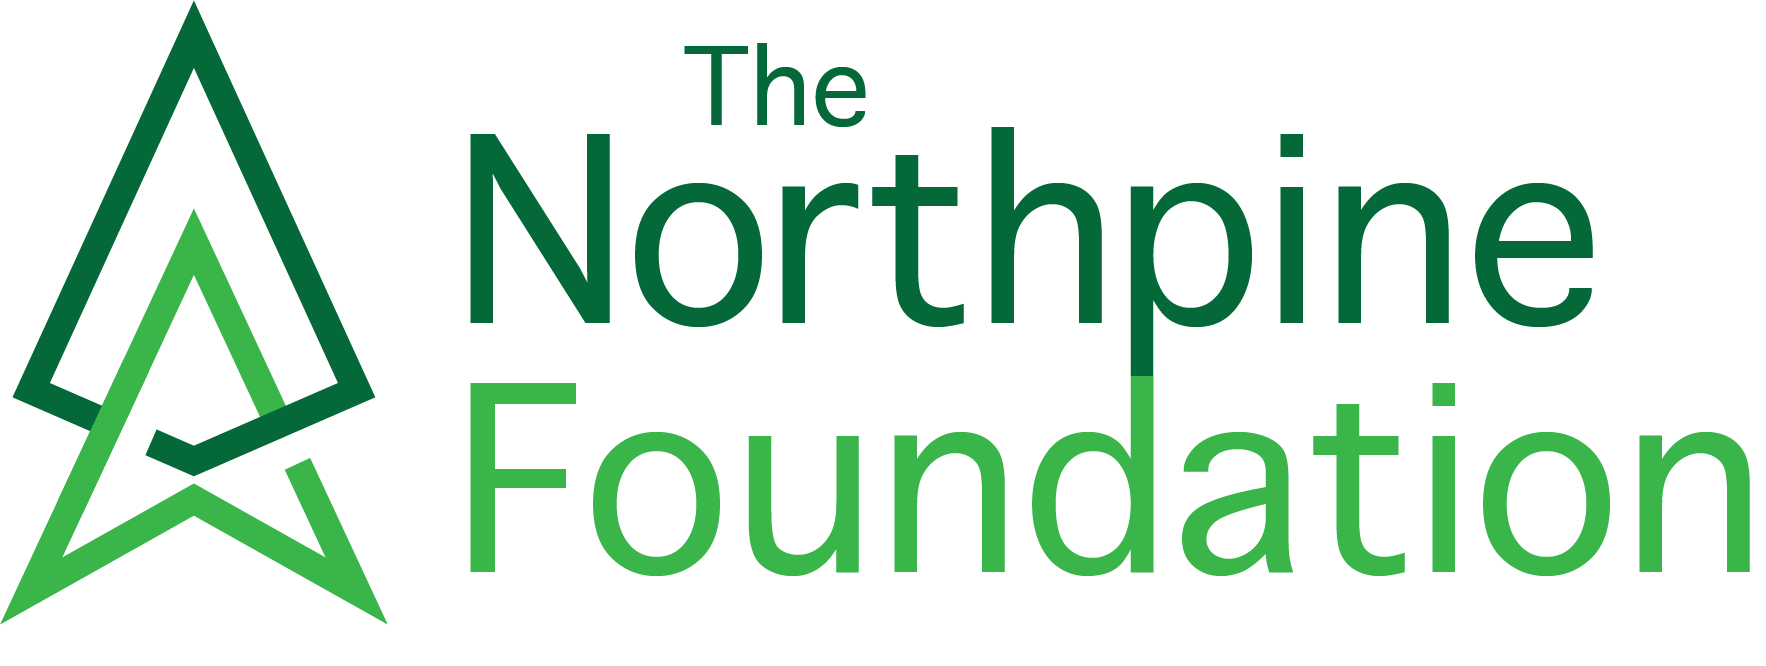 The Northpine Foundation